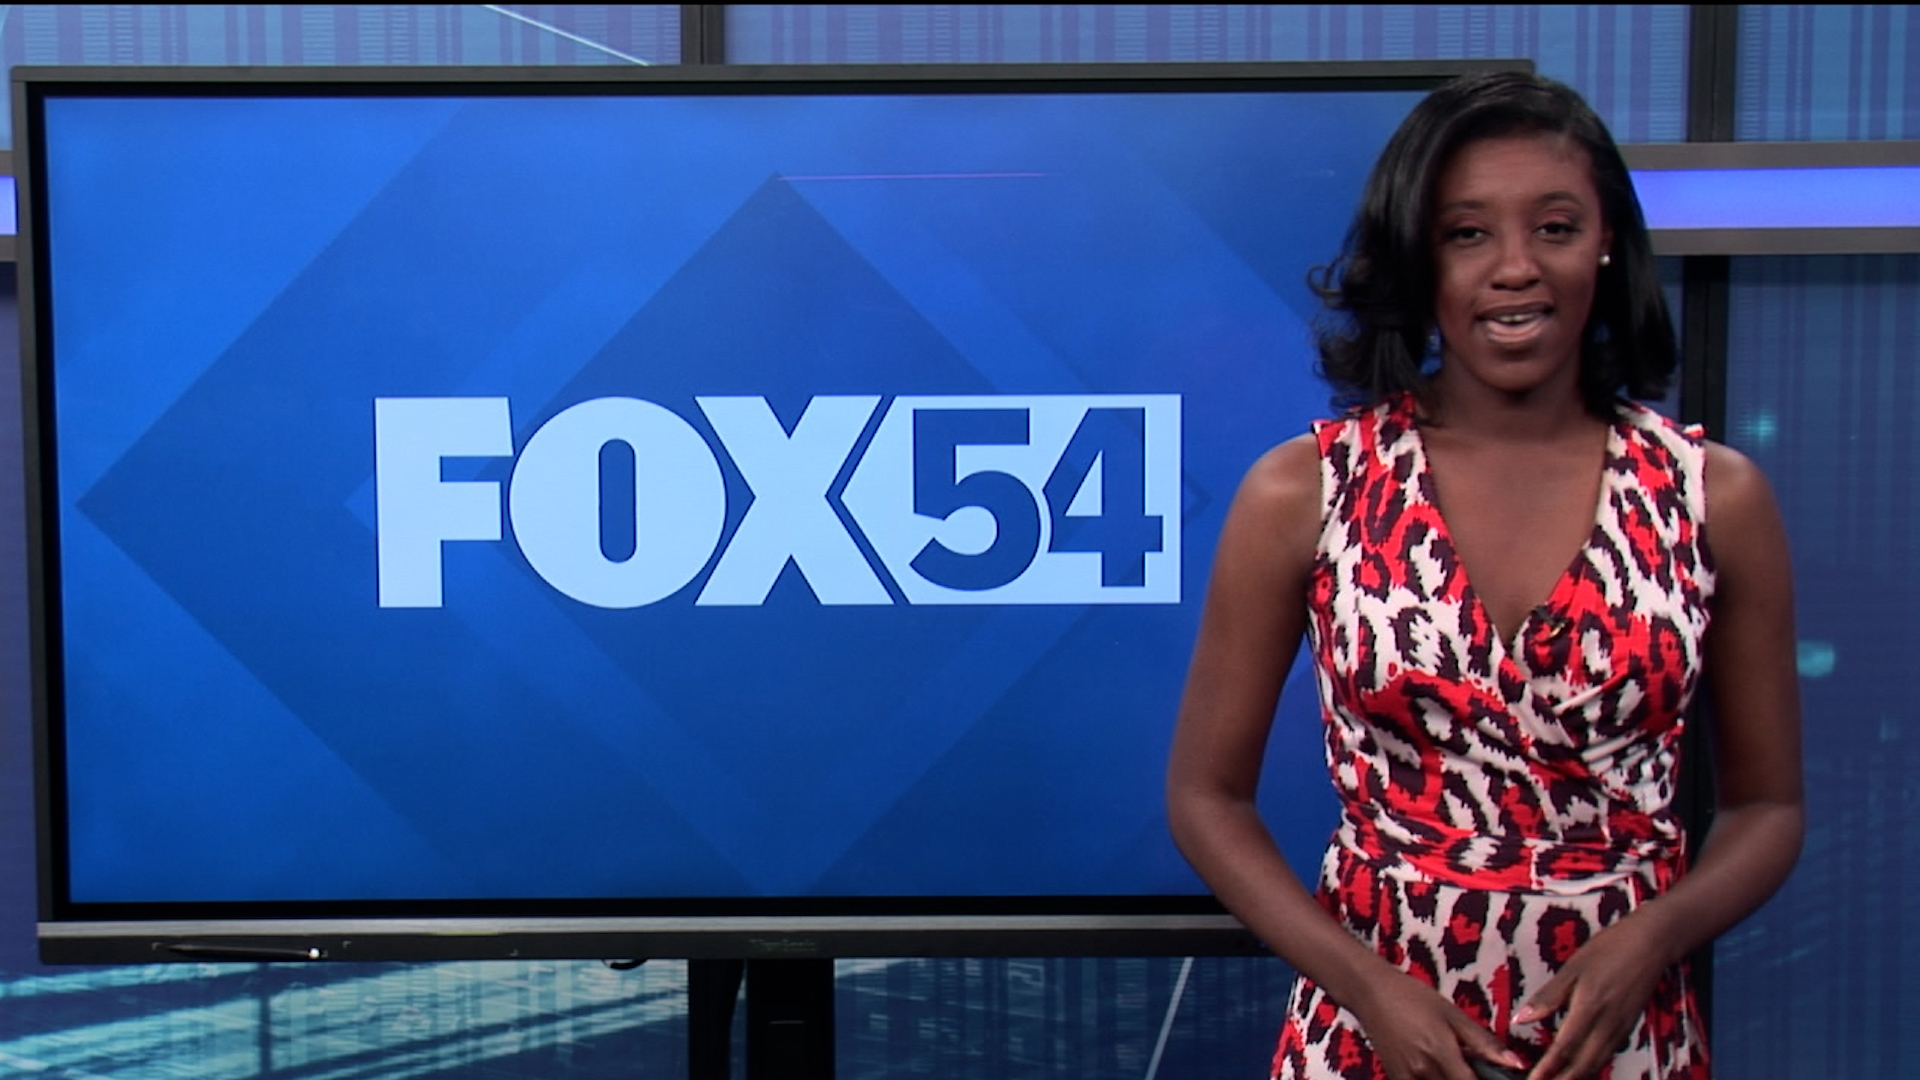 Wednesday's News I FOX54 in :54 secs